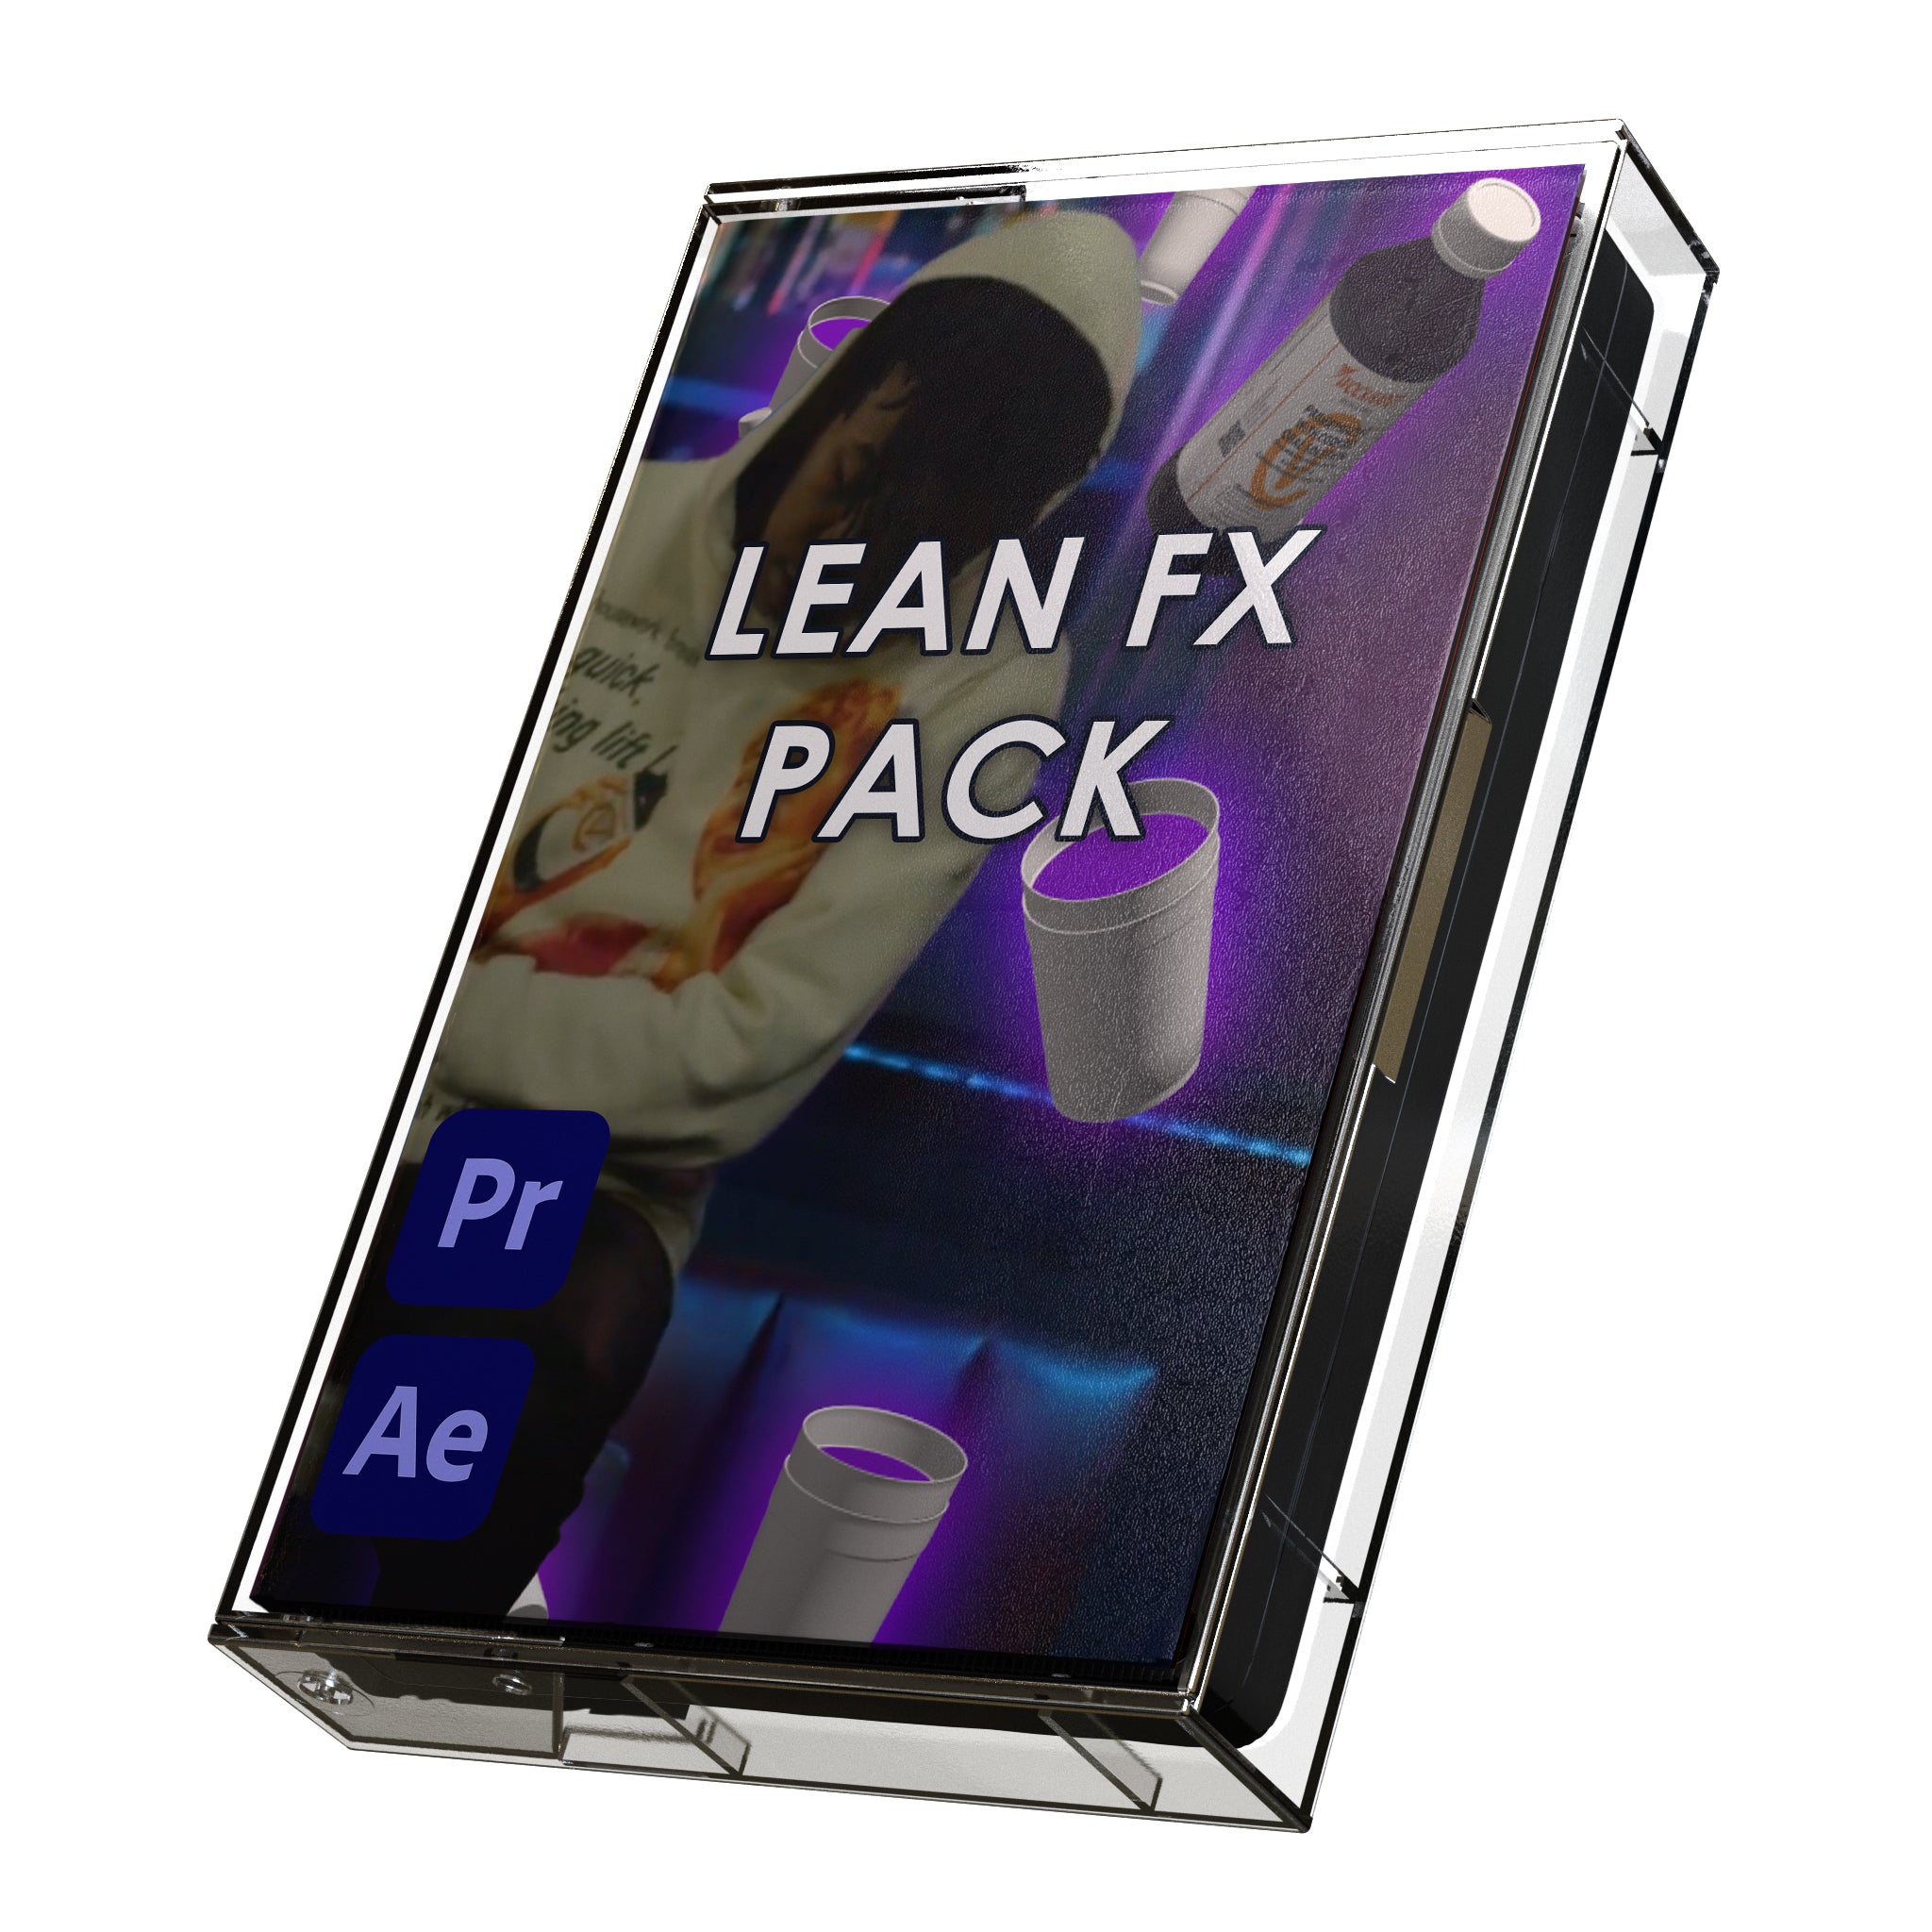 Lean FX Pack